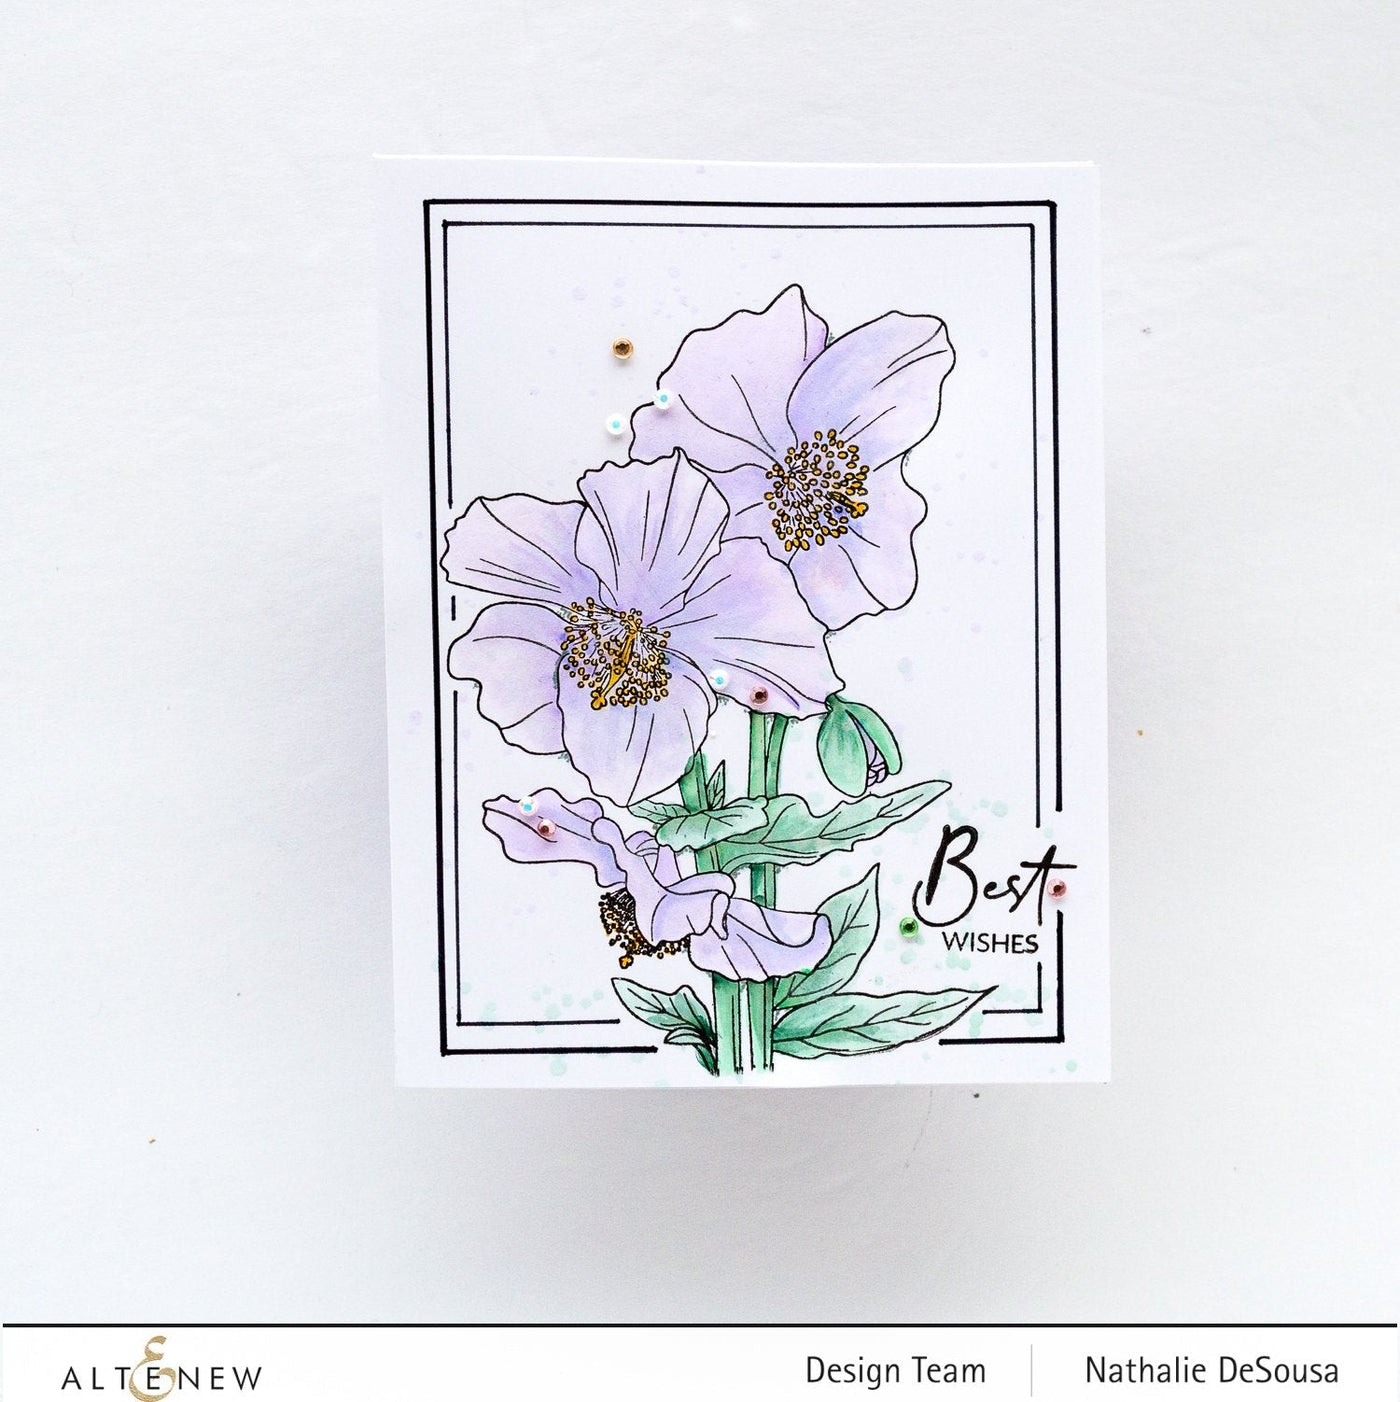 Stamp & Watercolor Bundle Paint-A-Flower: Himalayan Poppy & Artists' Watercolor 24 Pan Set Bundle